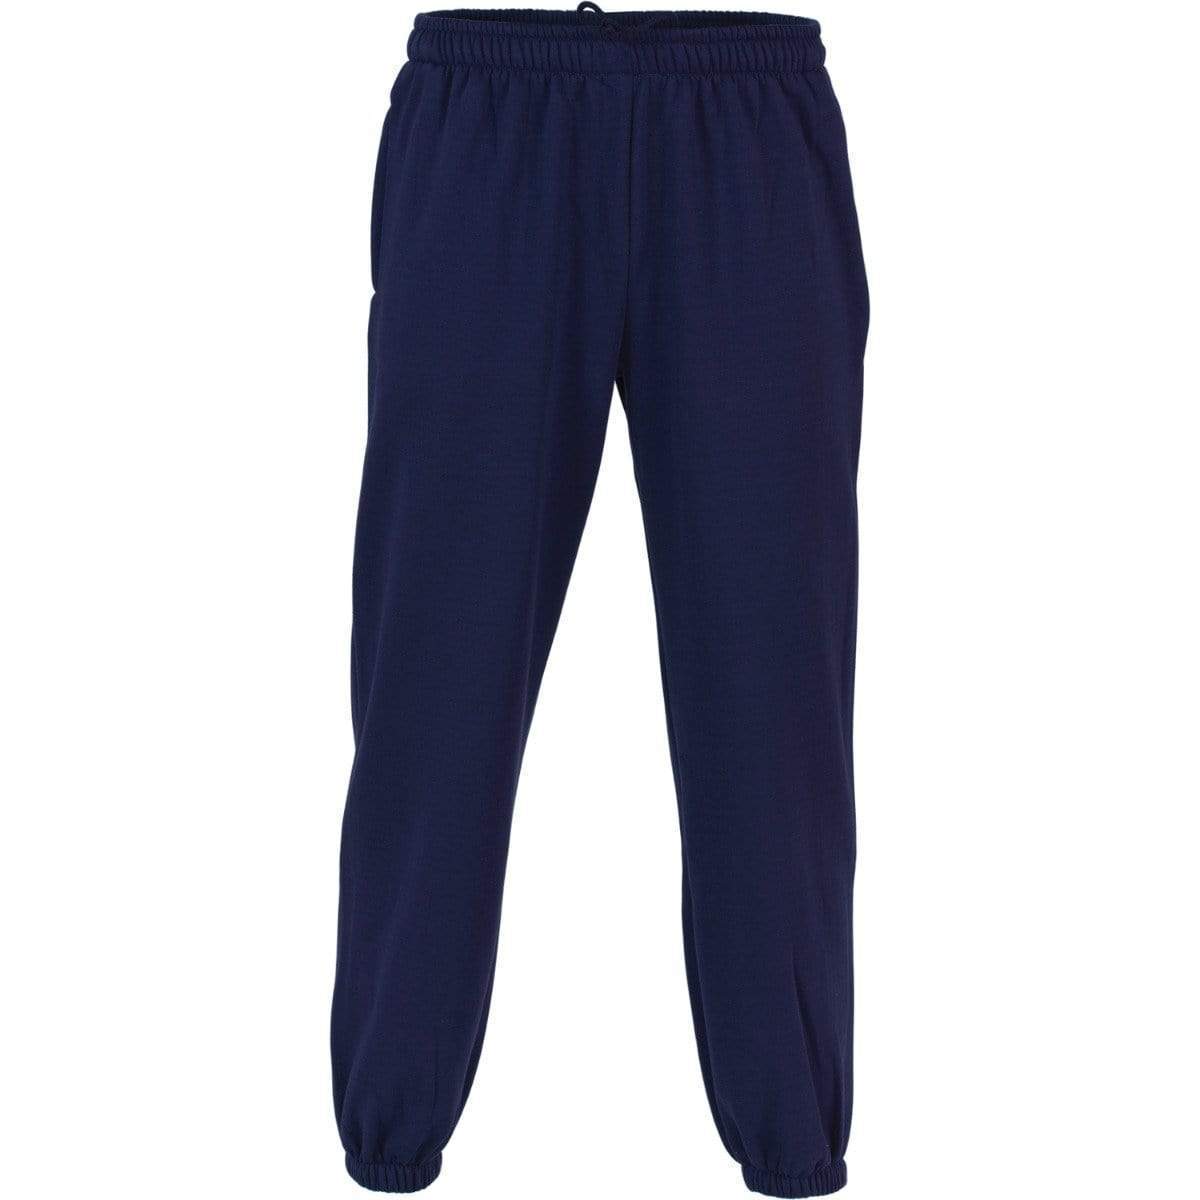 Dnc Workwear Poly/cotton Fleecy Track Pants - 5401 Work Wear DNC Workwear Navy S 